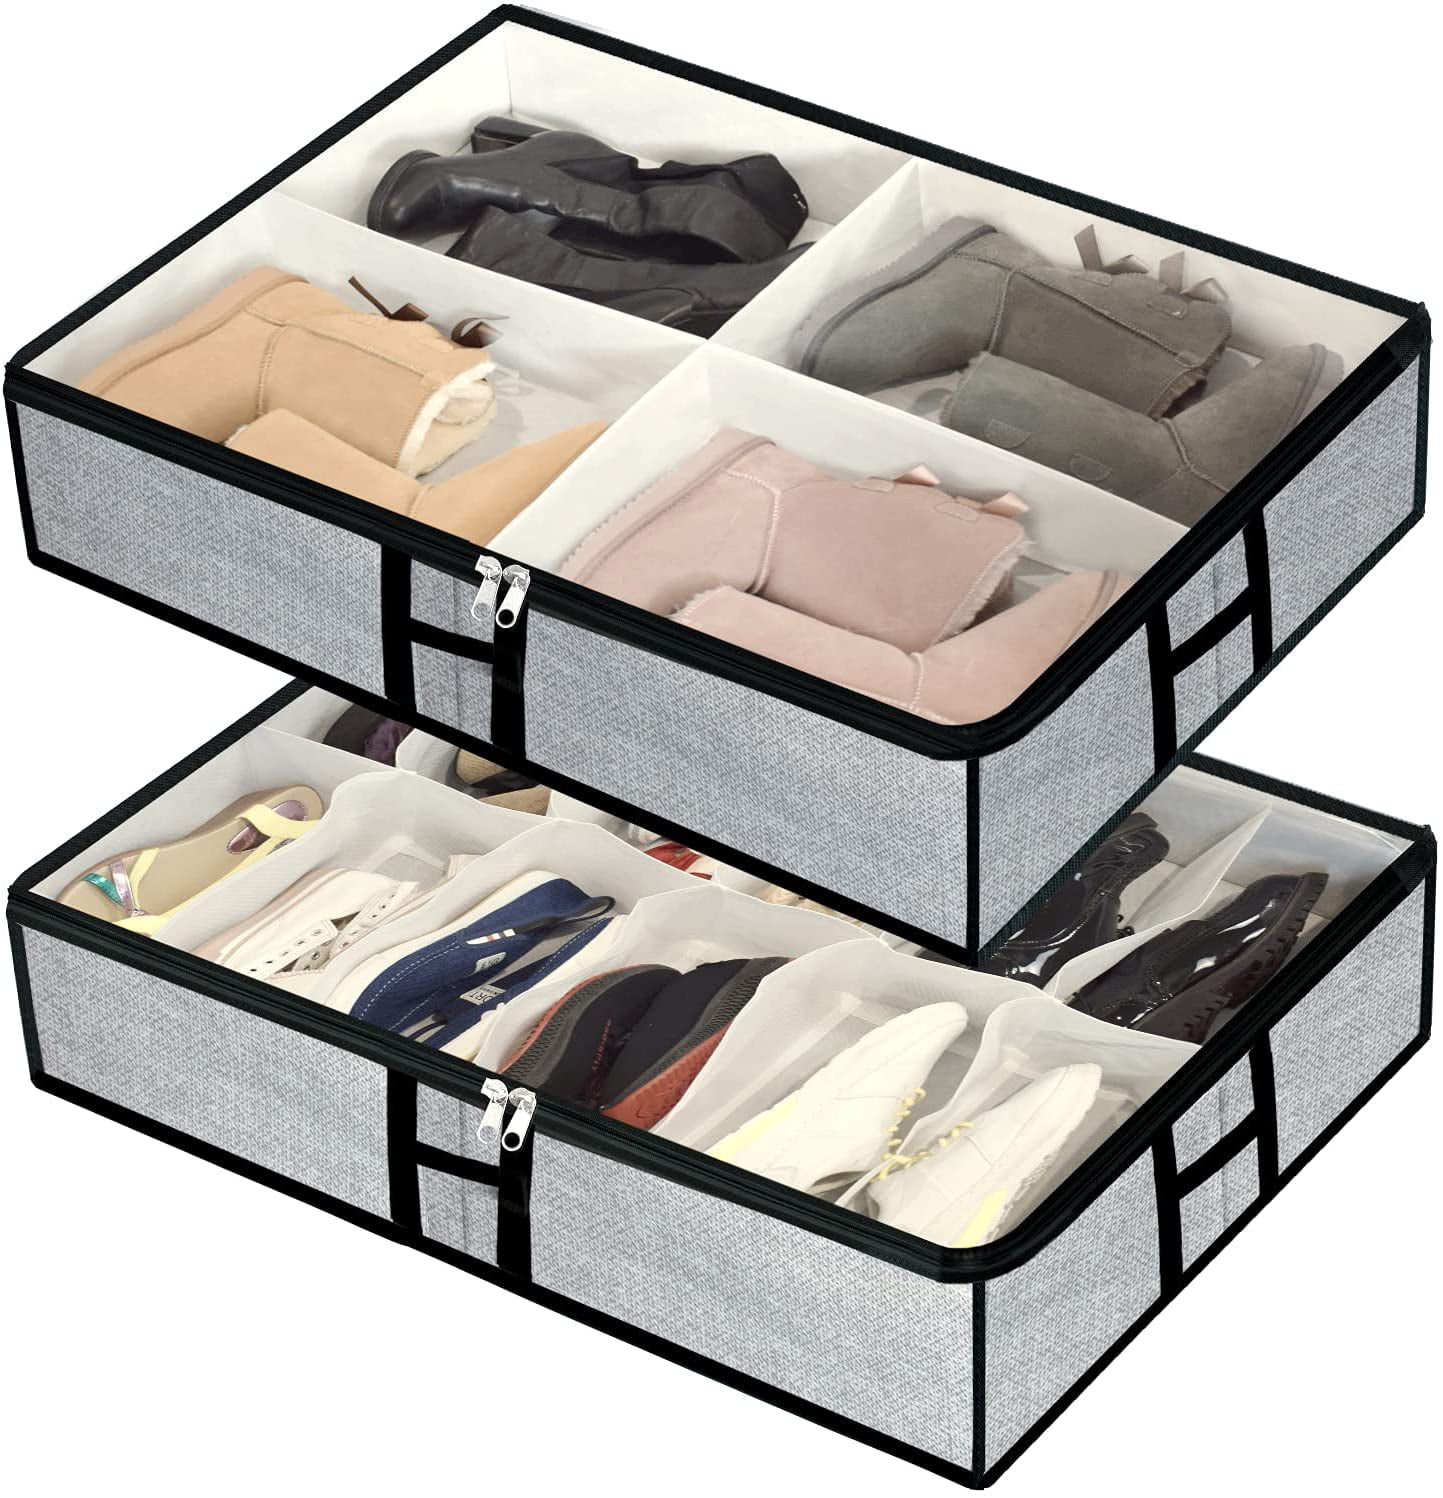 12Pair New Shoes Storage Organizer Holder Container Under Bed Closet Bag Box 